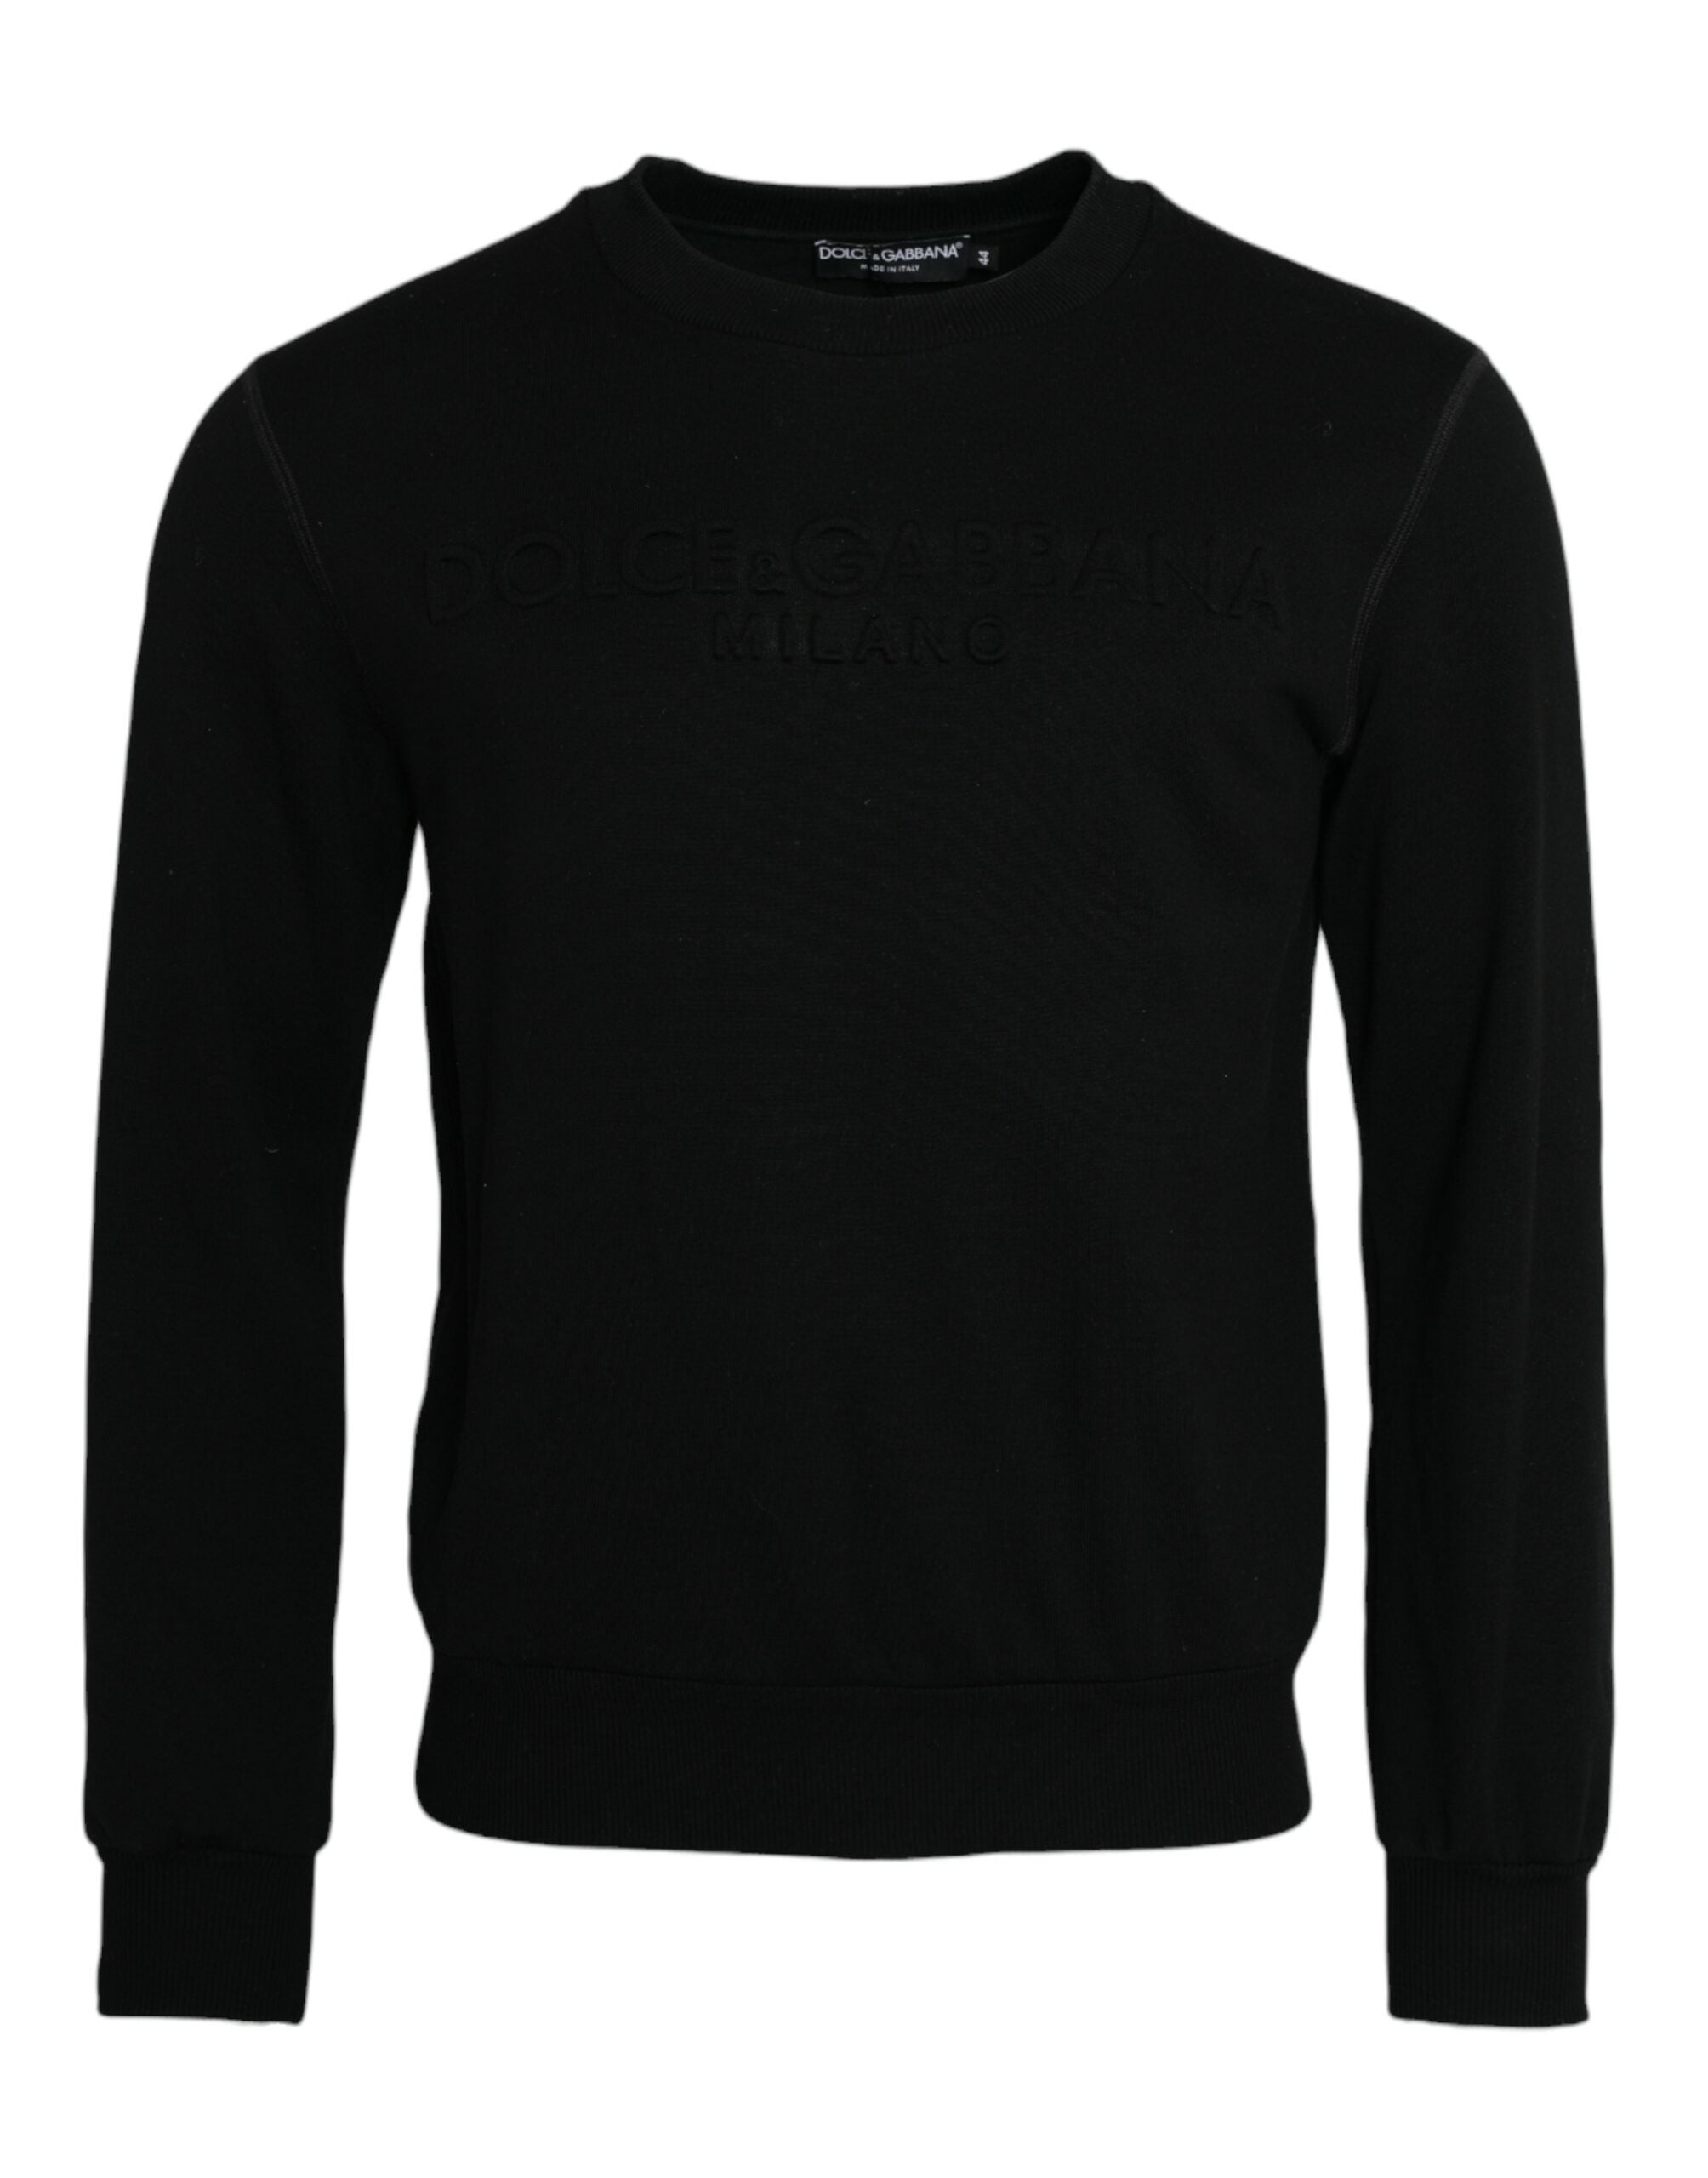 Dolce & Gabbana Black Cotton Long Sleeves Sweatshirt Men's Sweater